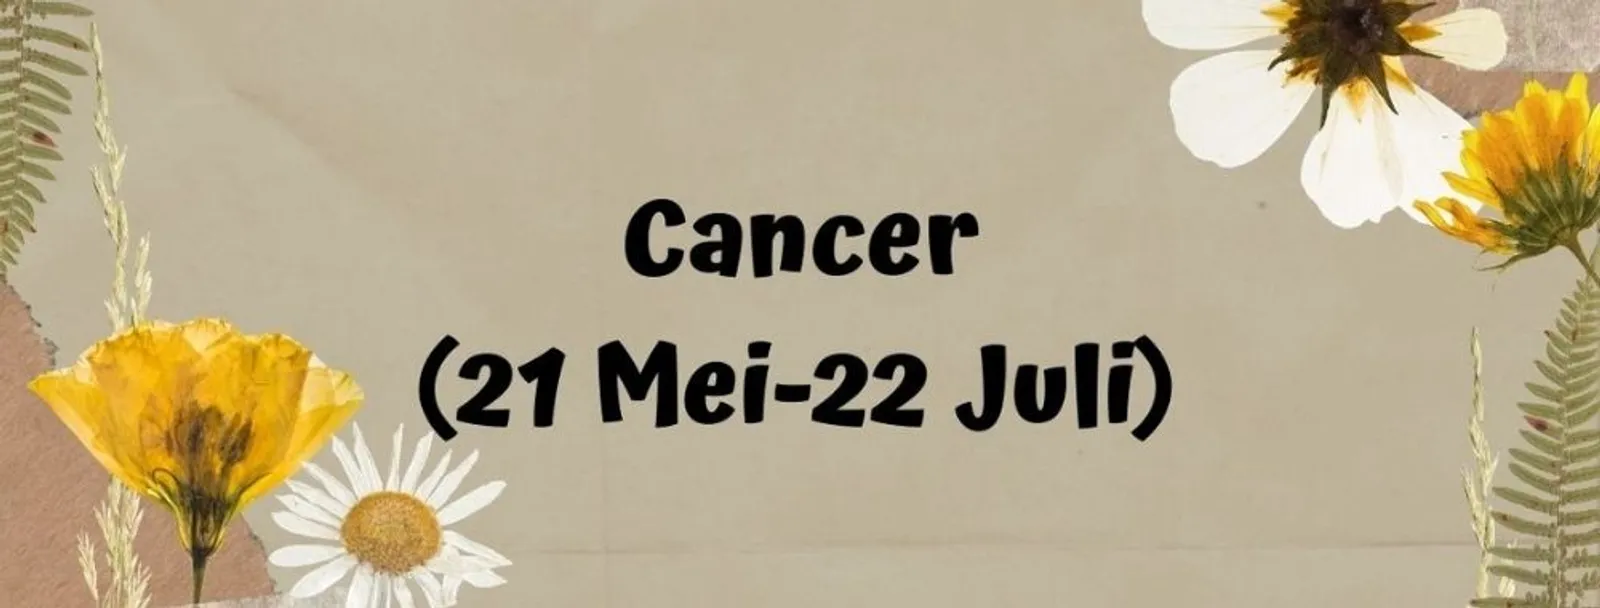 Prediksi Zodiak 25 November 2020, Hubungan Cancer Sedang Diuji Nih!